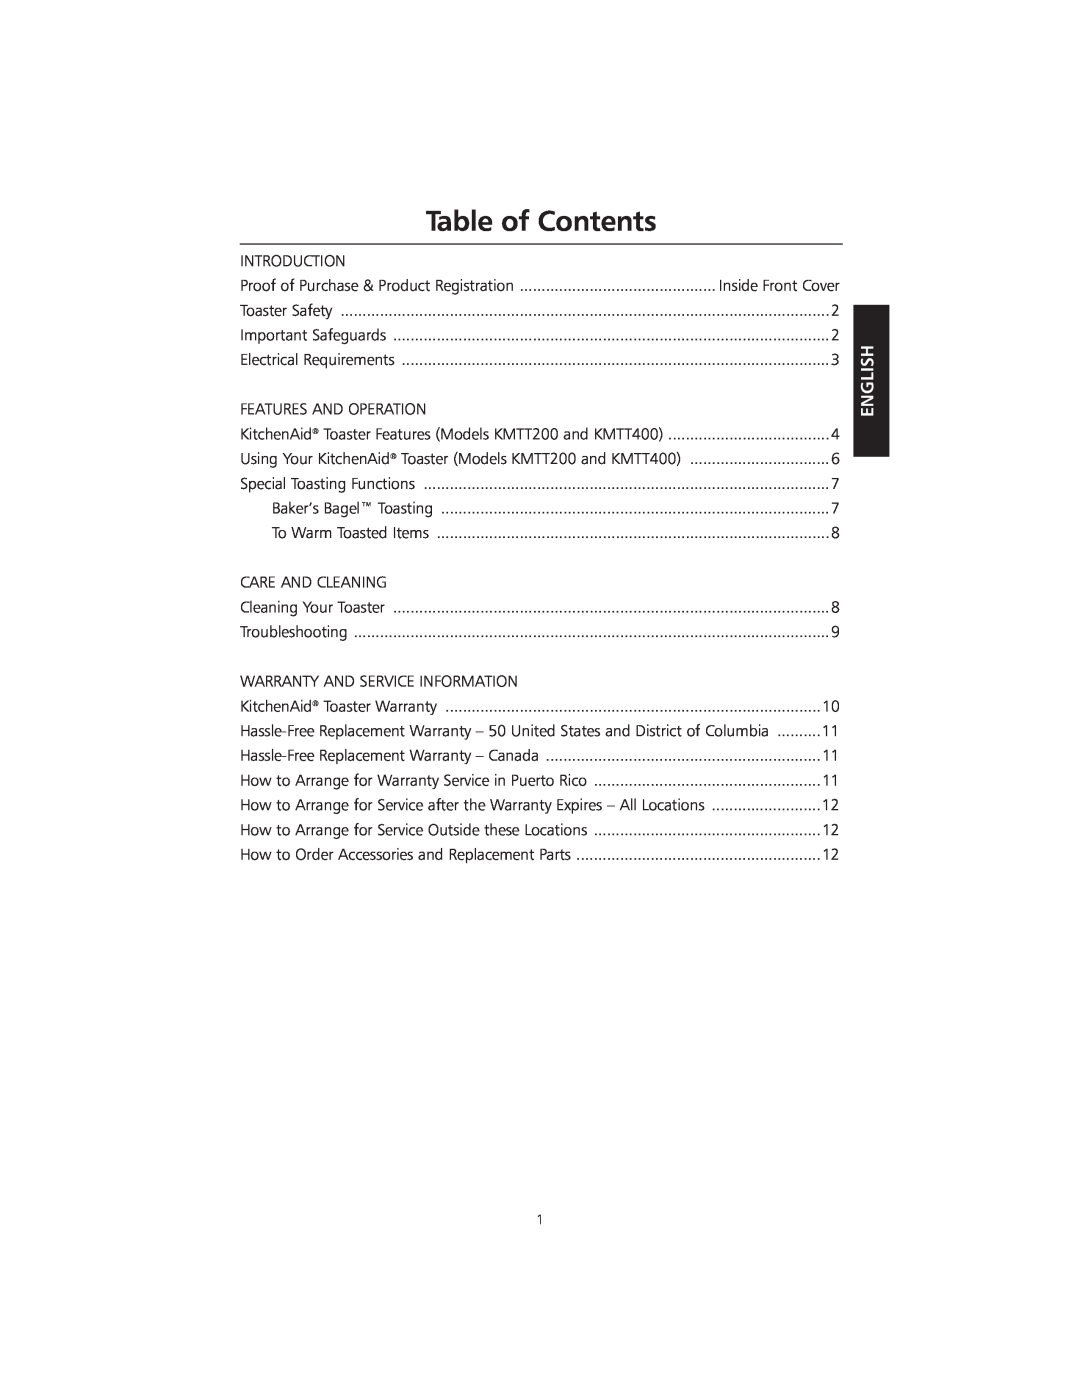 KitchenAid KMTT200 manual Table of Contents, English 